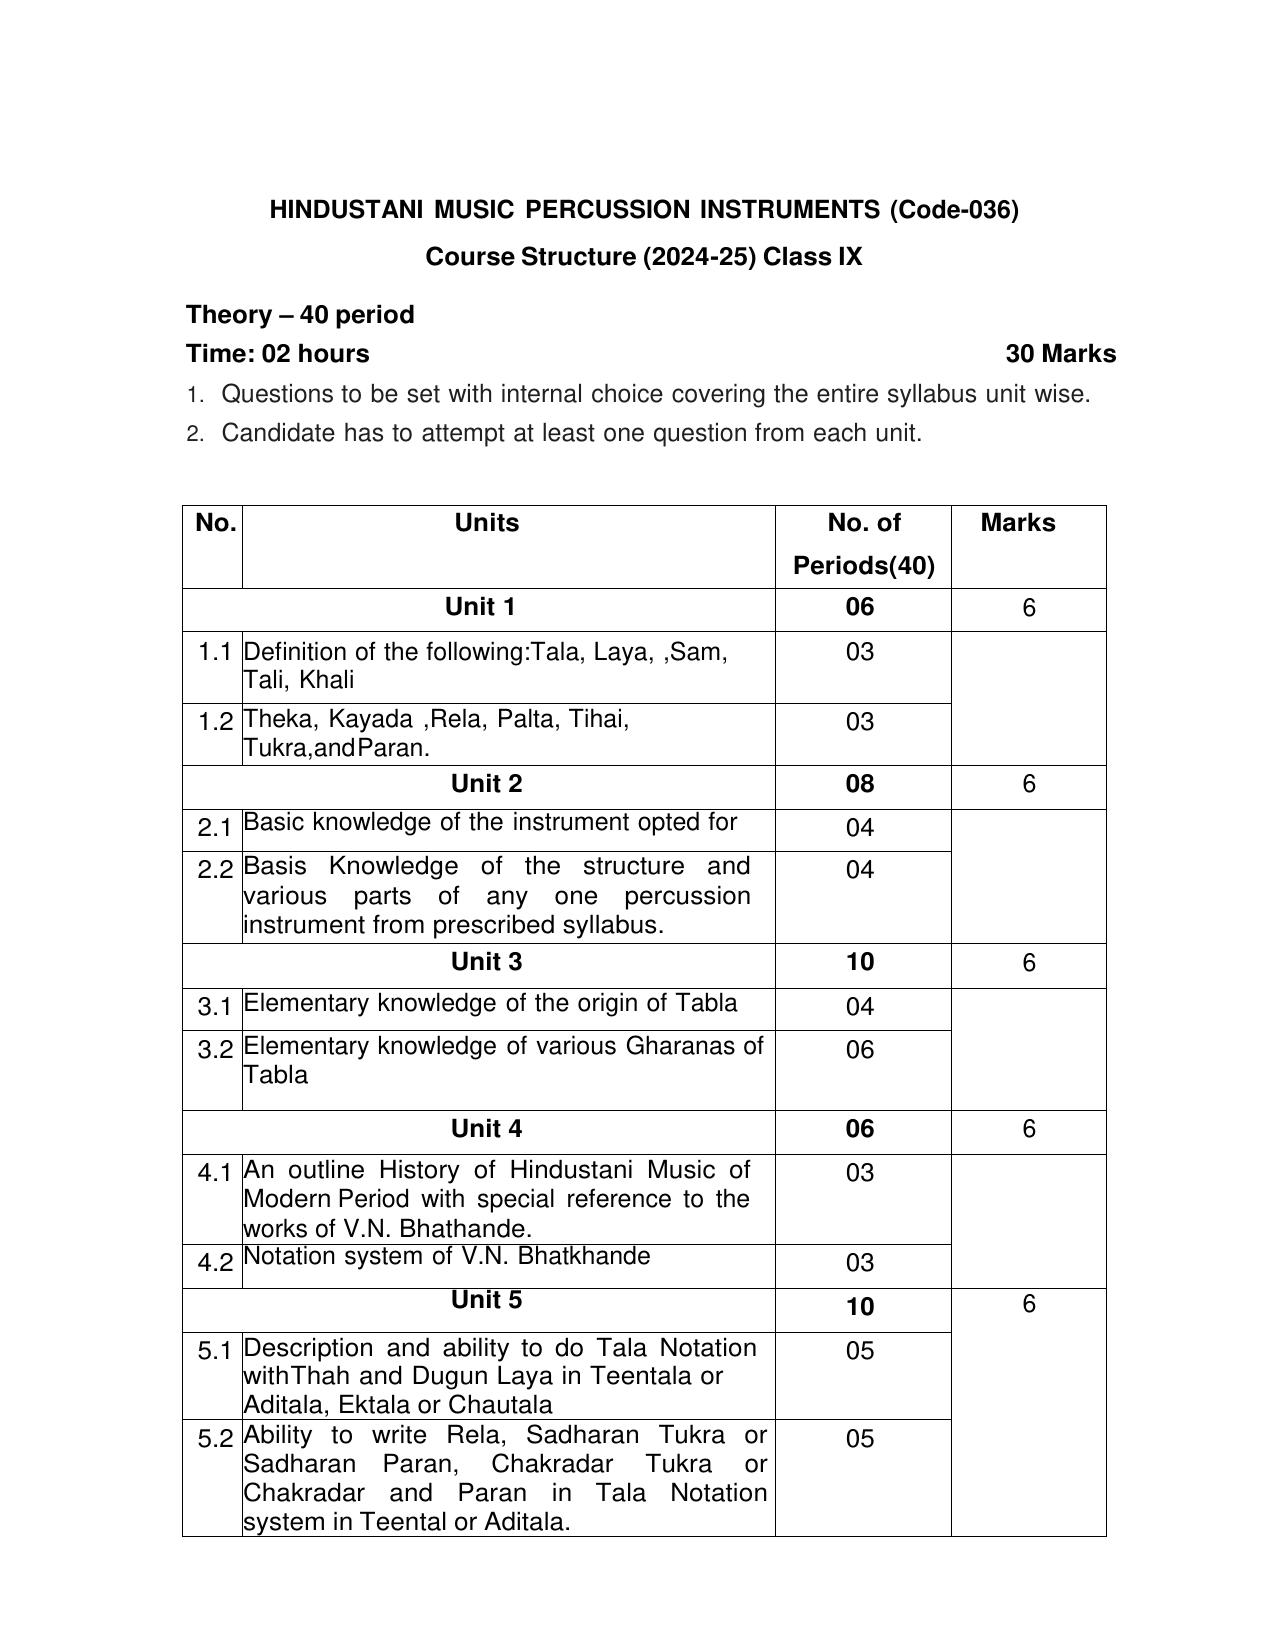 CBSE Class 9 & 10 Syllabus 2022-23 - Hindustani Music Percussion Instruments - Page 3